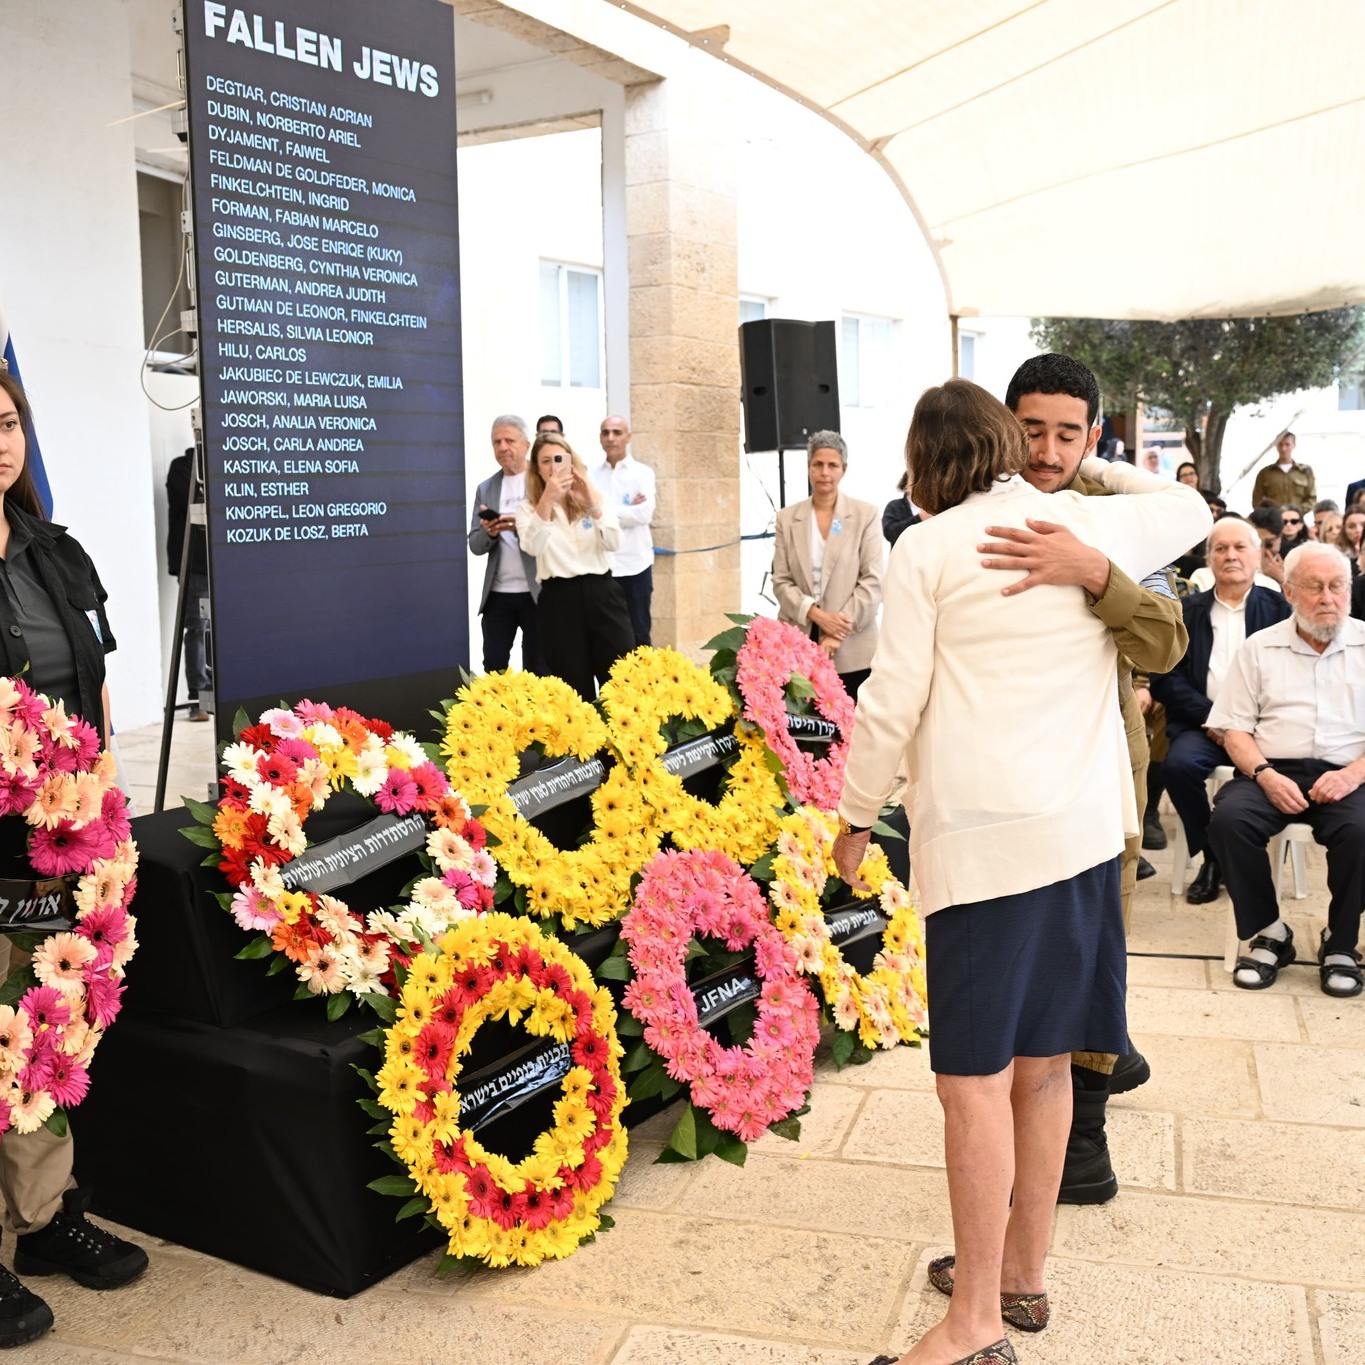 The National Institutions’ Yom Hazikaron memorial ceremony